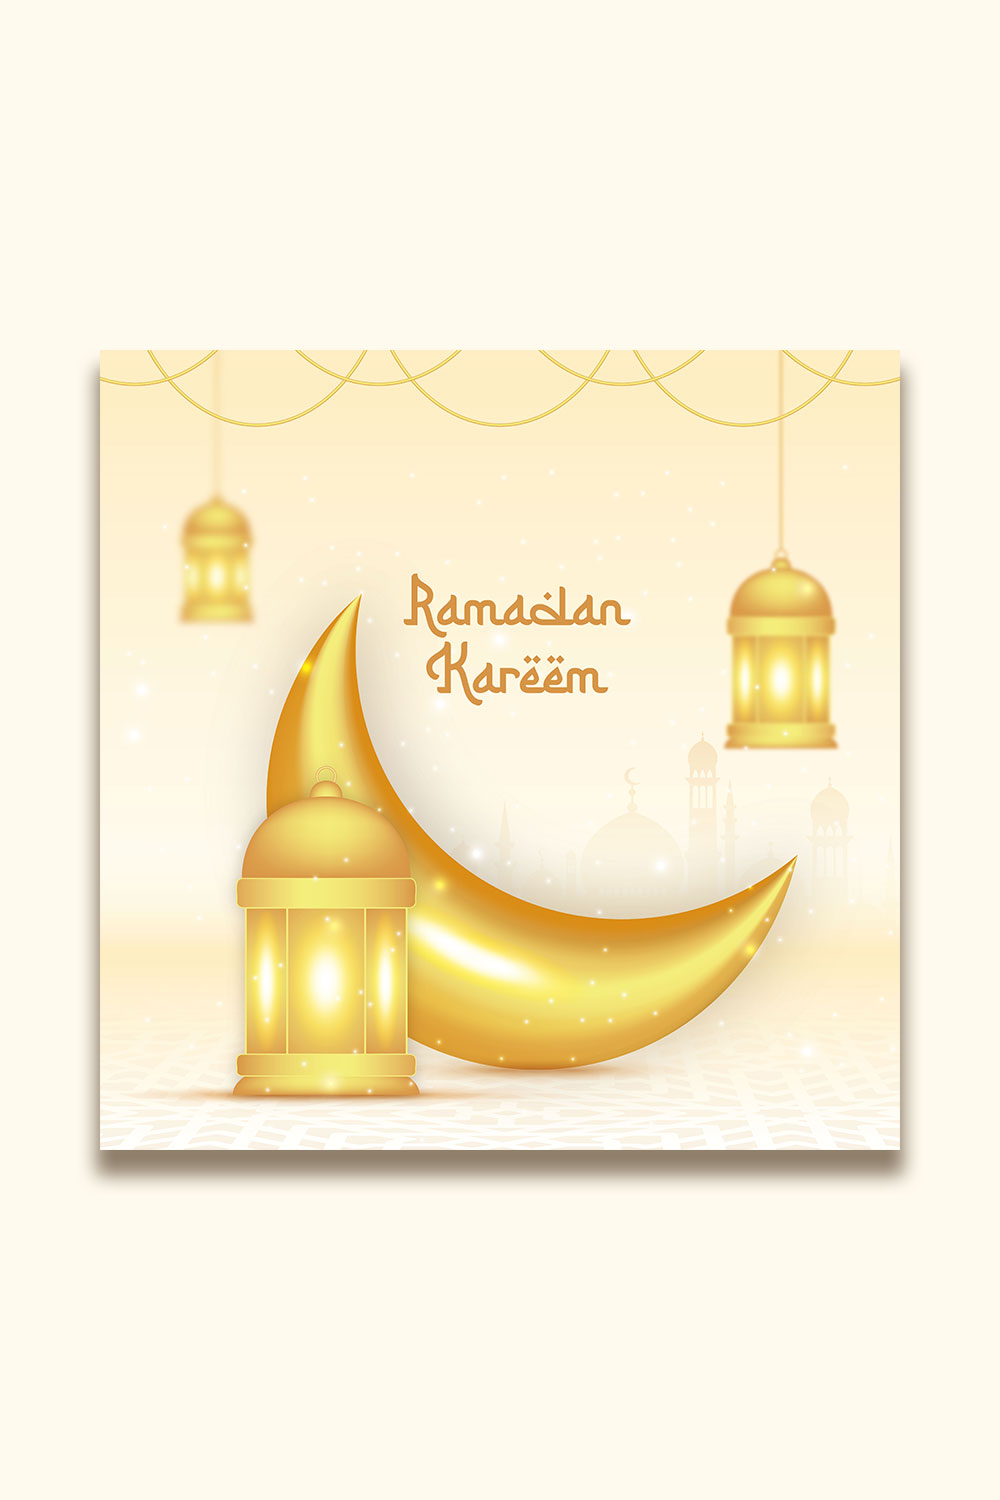 Ramadan Kareem greeting card with Islamic background pinterest preview image.